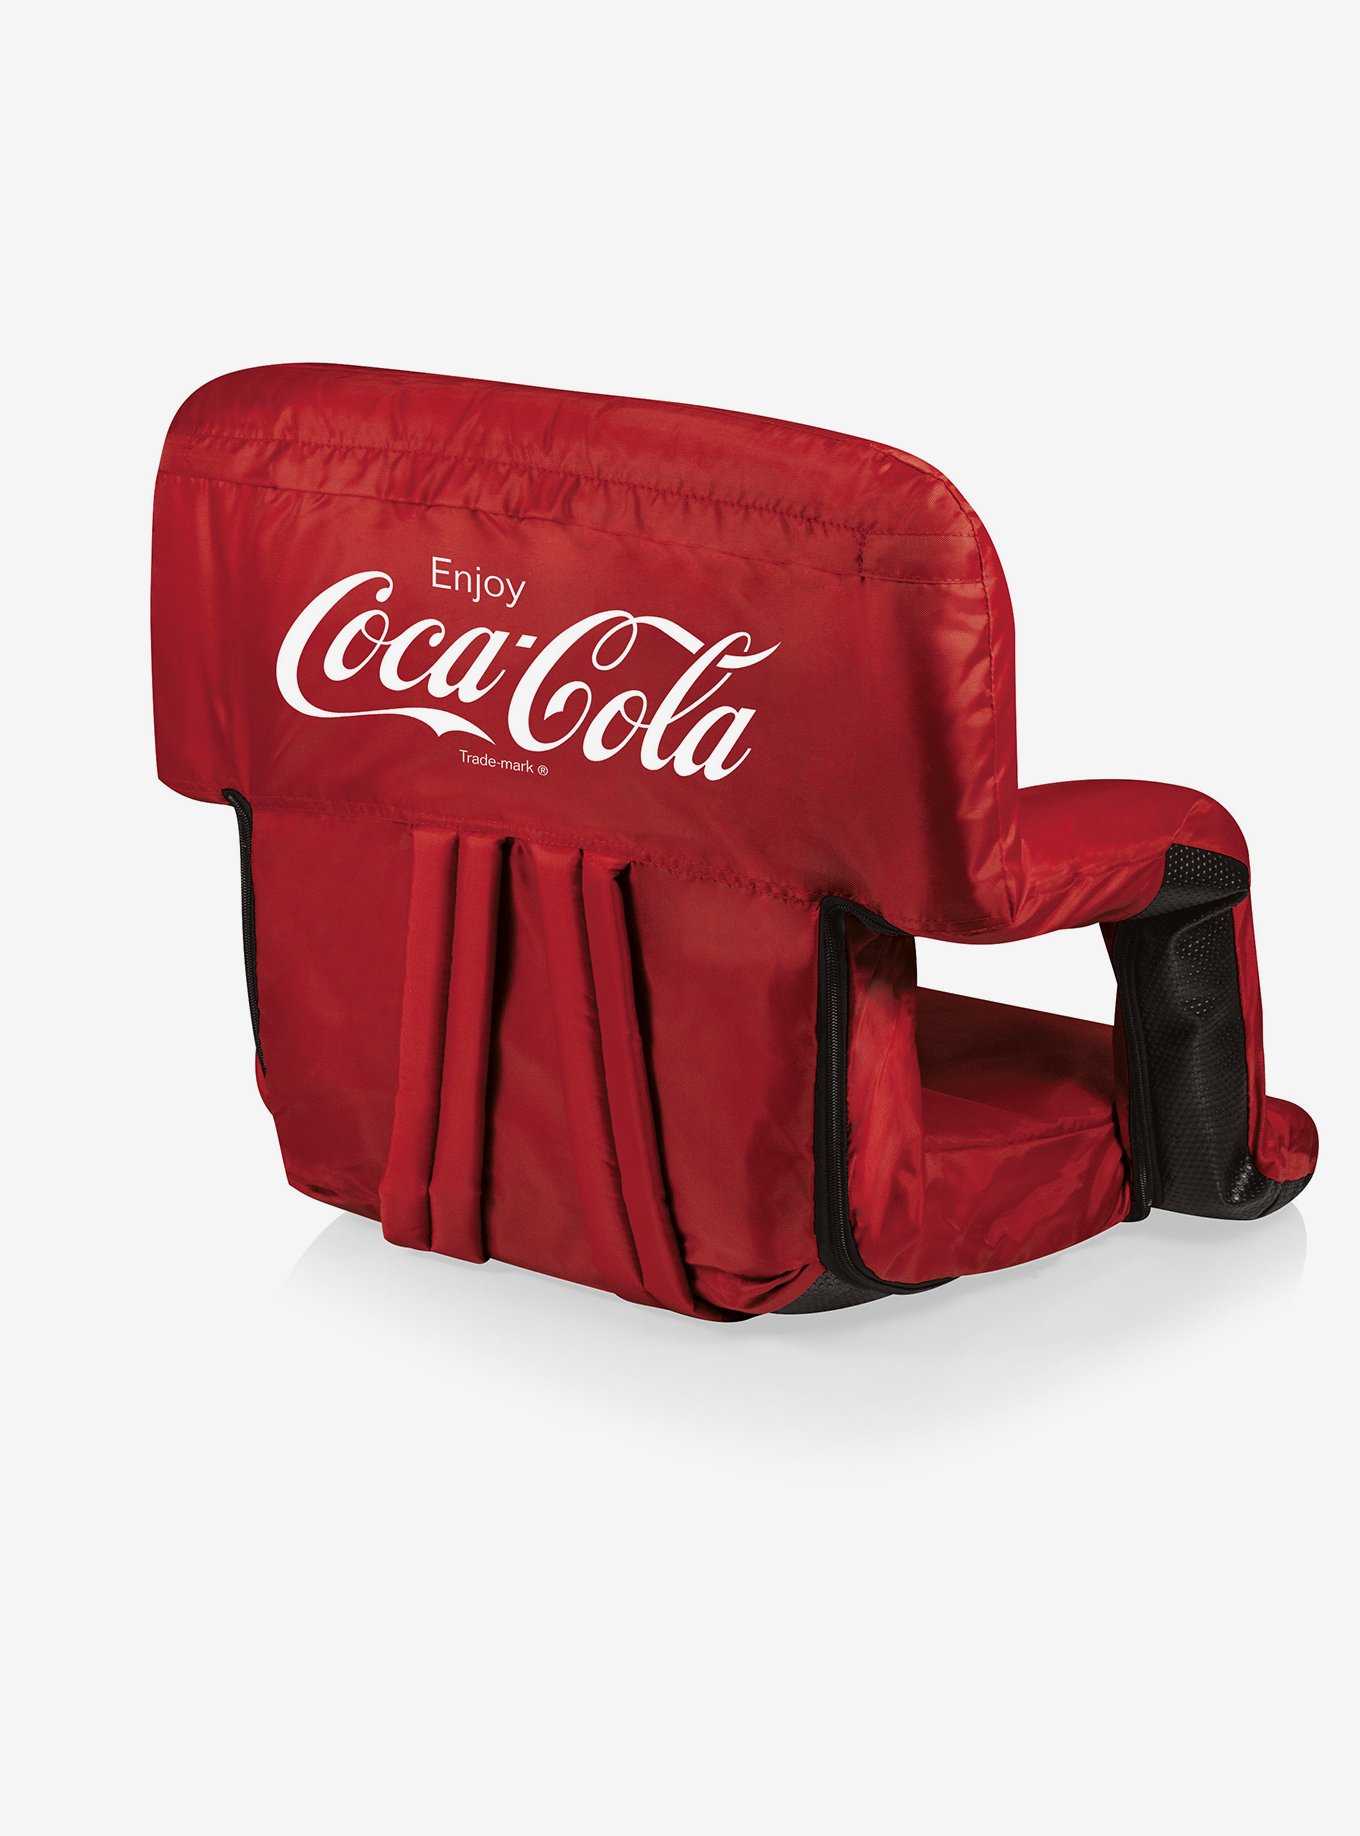 Coke Coca-Cola Enjoy Coca-Cola Ventura Seat, , hi-res